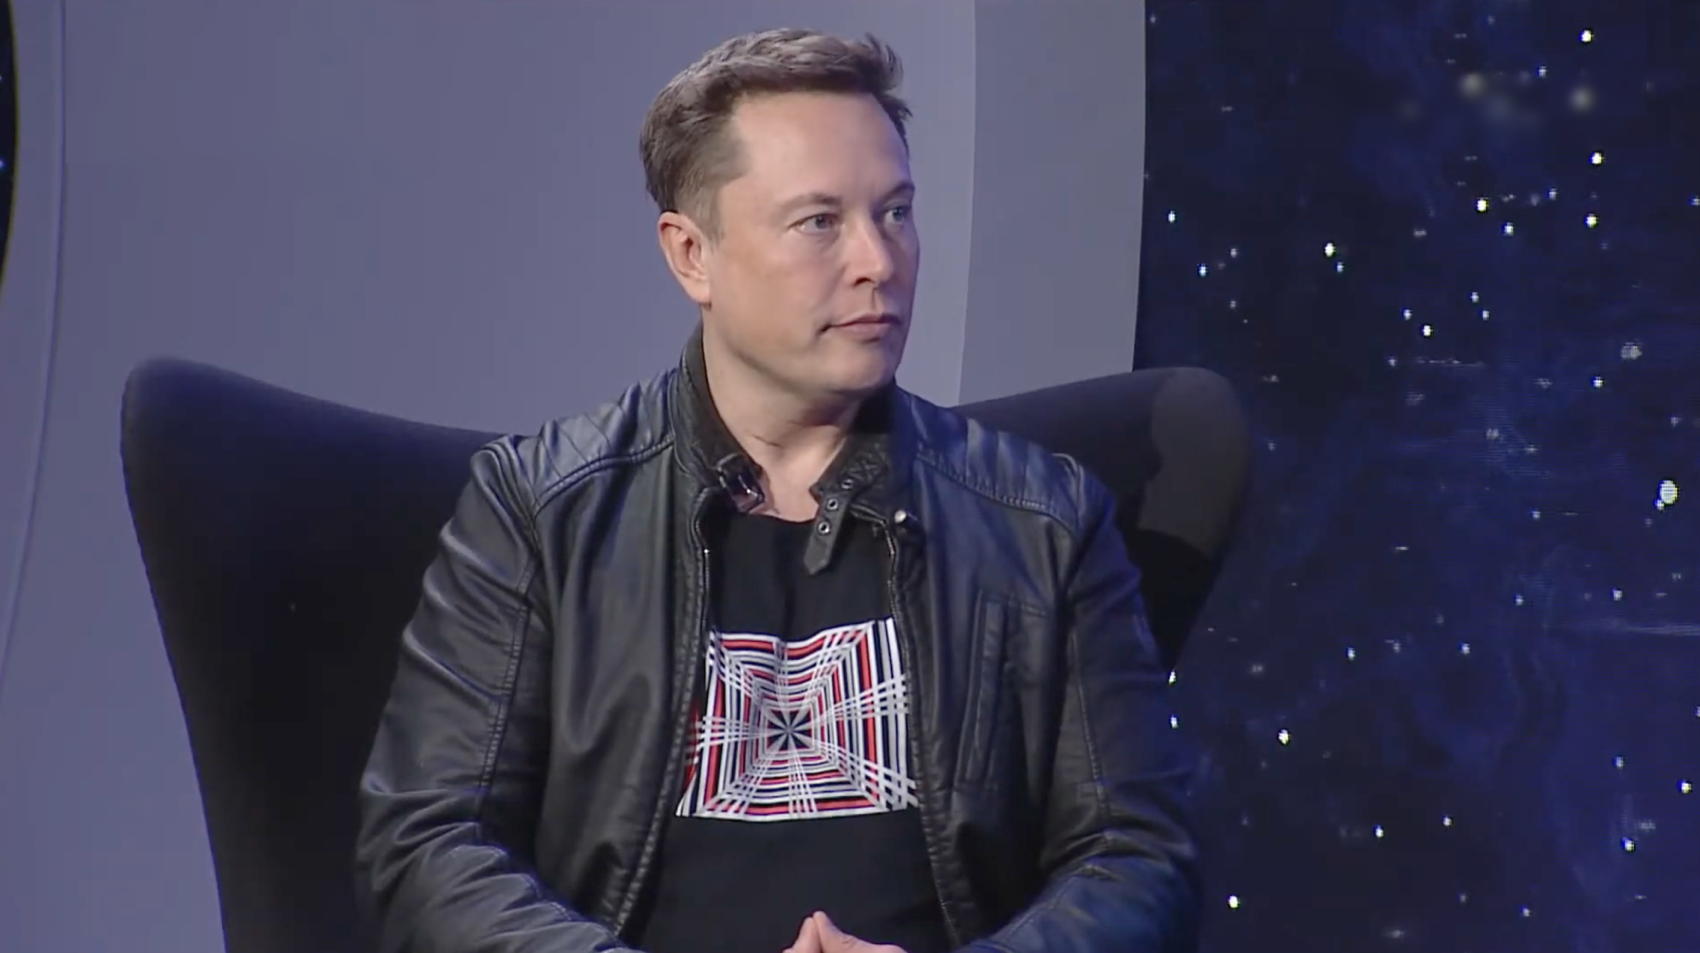 Elon Musk Axel Springer Interview